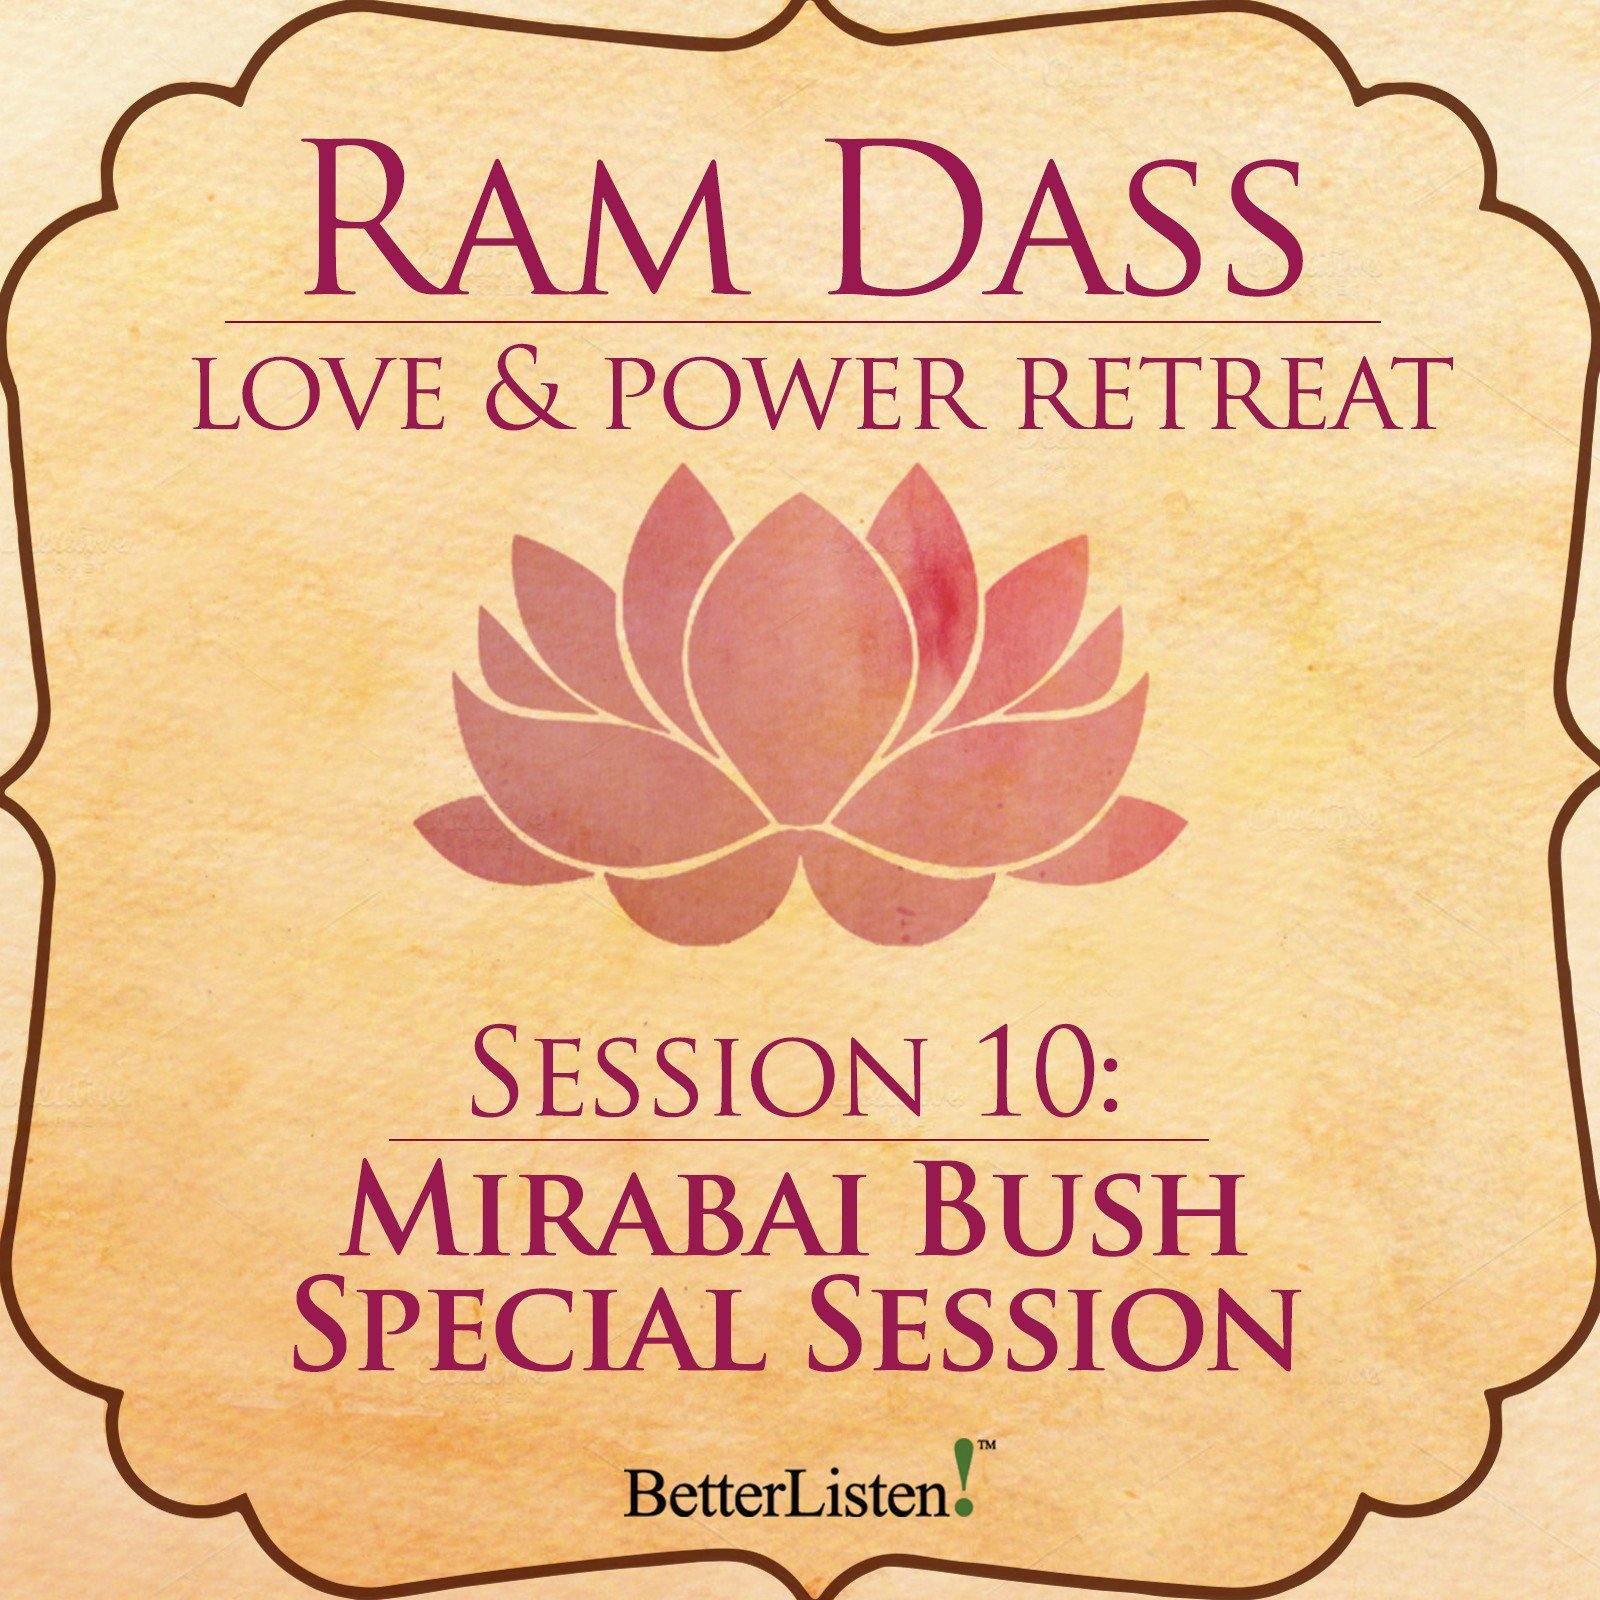 Mirabai Bush Special Session from the Love and Power Retreat Audio Program Ram Dass LSR - BetterListen!